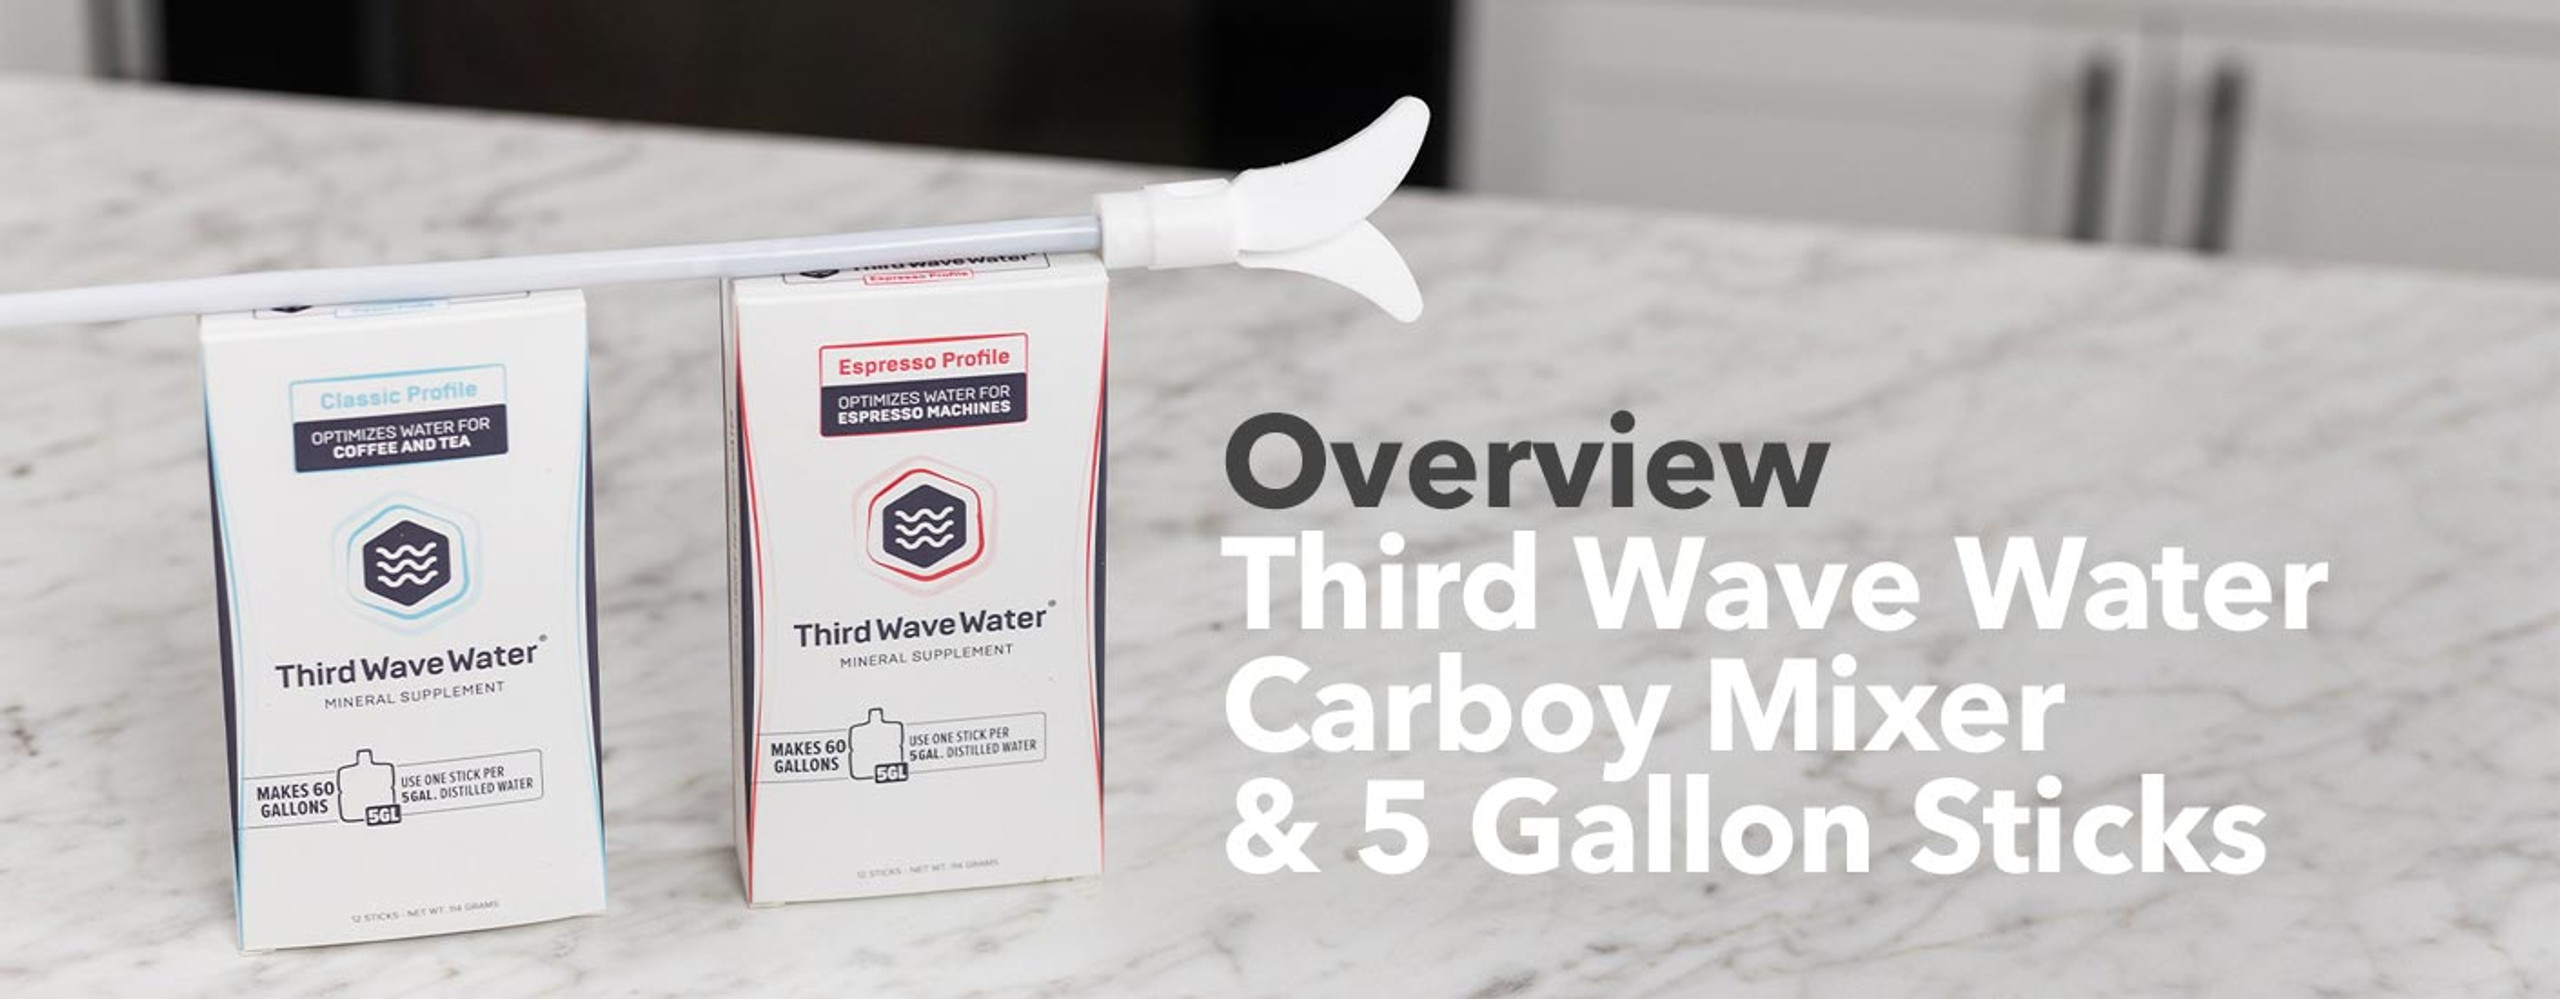 Third Wave Water Carboy Mixer & 5 Gallon Sticks